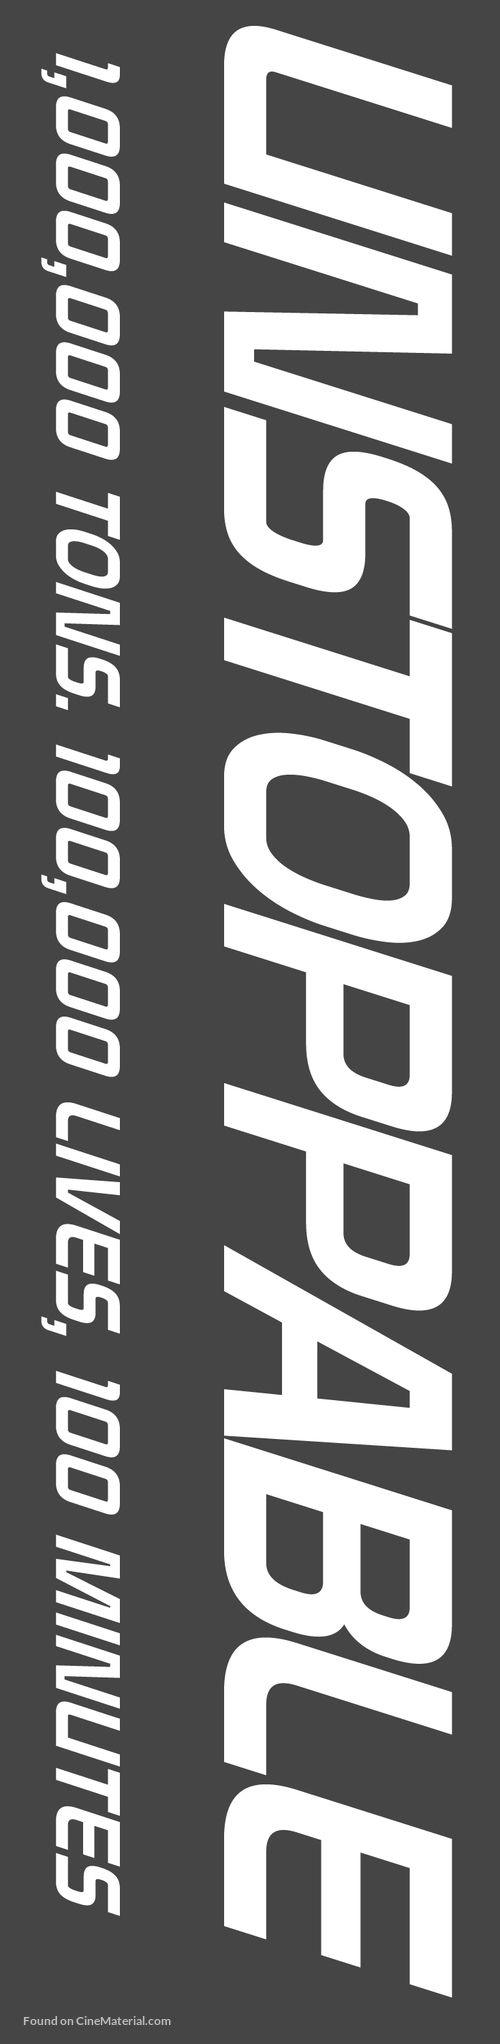 Unstoppable - Logo